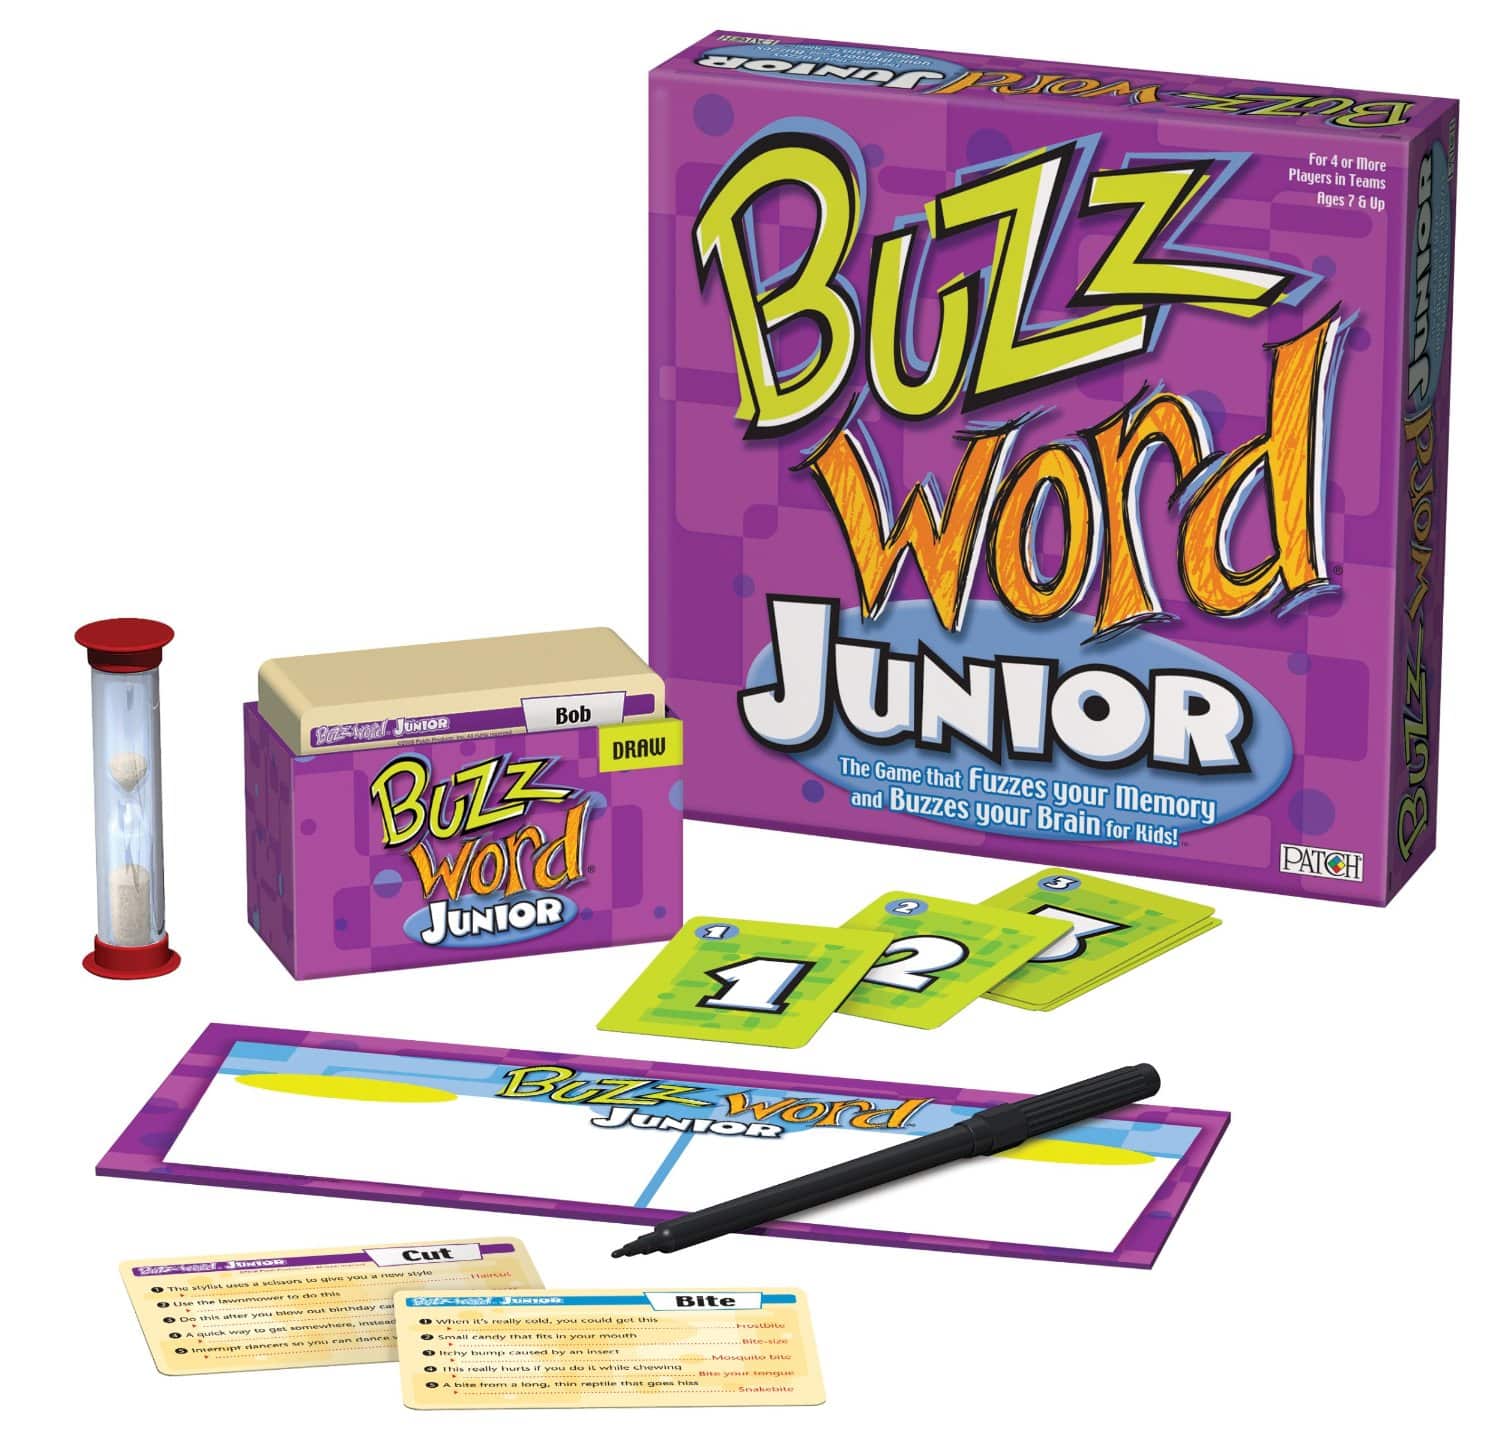 DEAL ALERT: Buzzword Junior – 33% off!